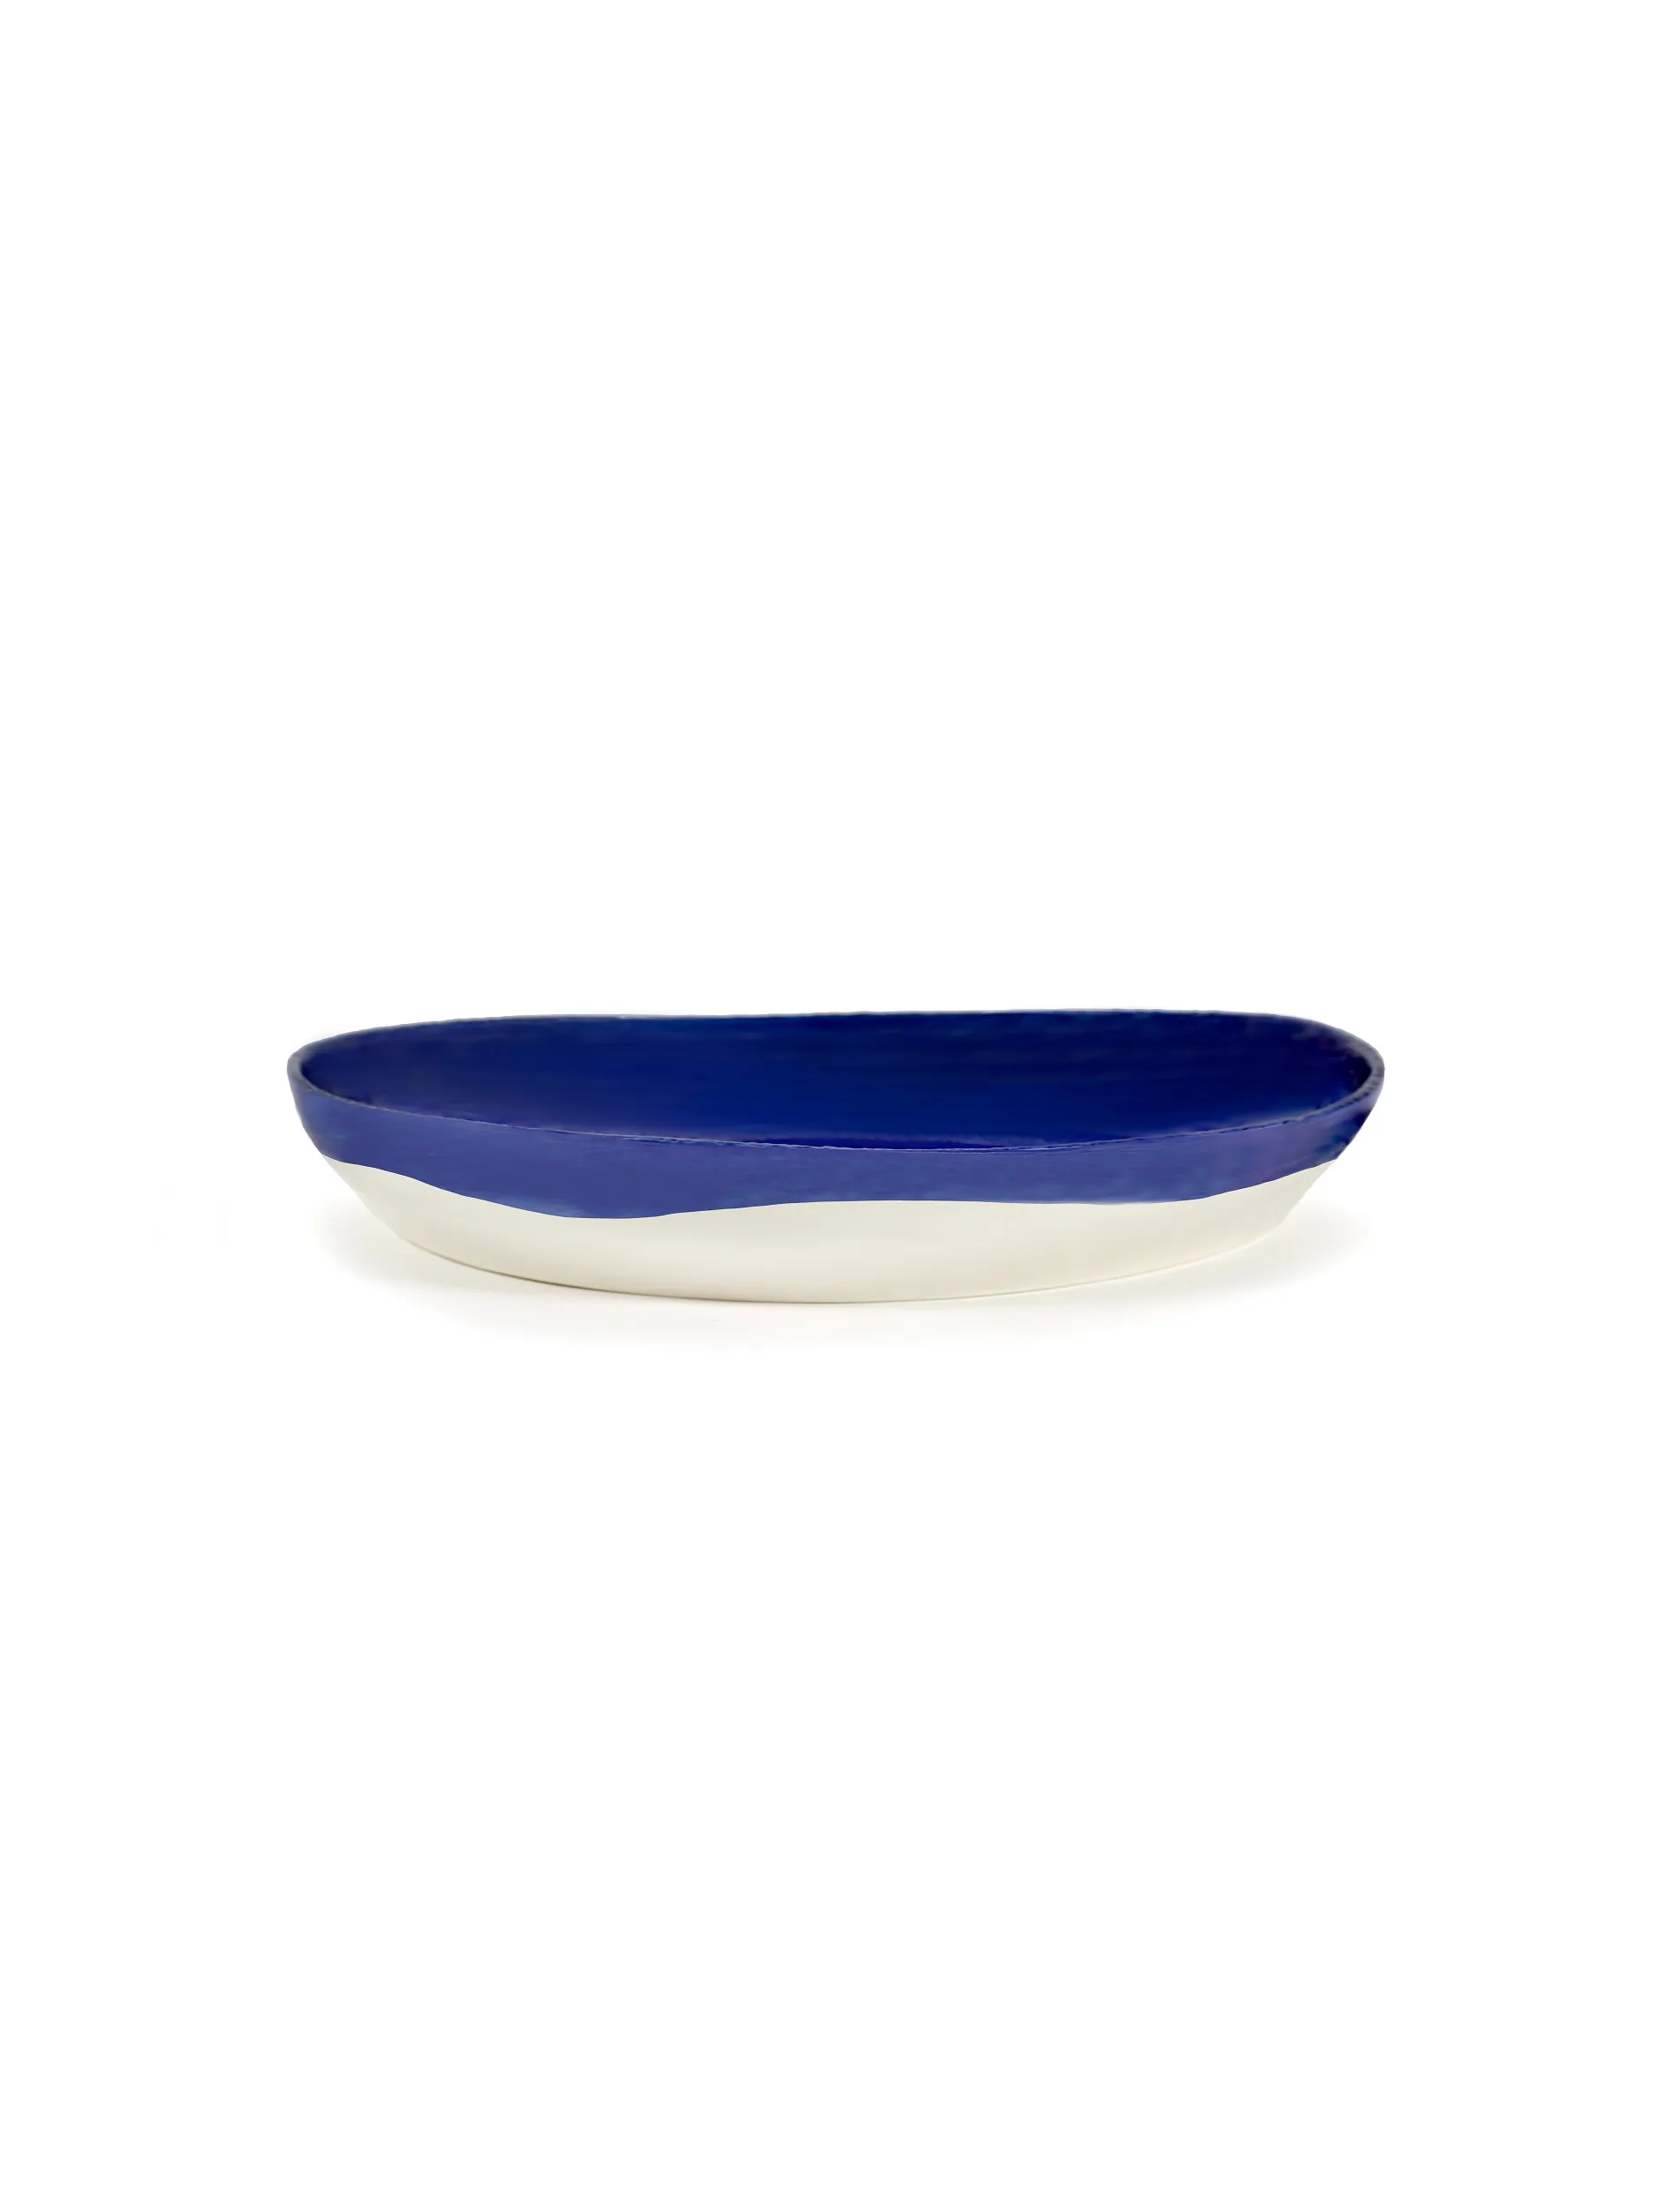 Serving Plate M Dark Blue-White Feast Ottolenghi by Serax L 36 W 36 H 6 CM